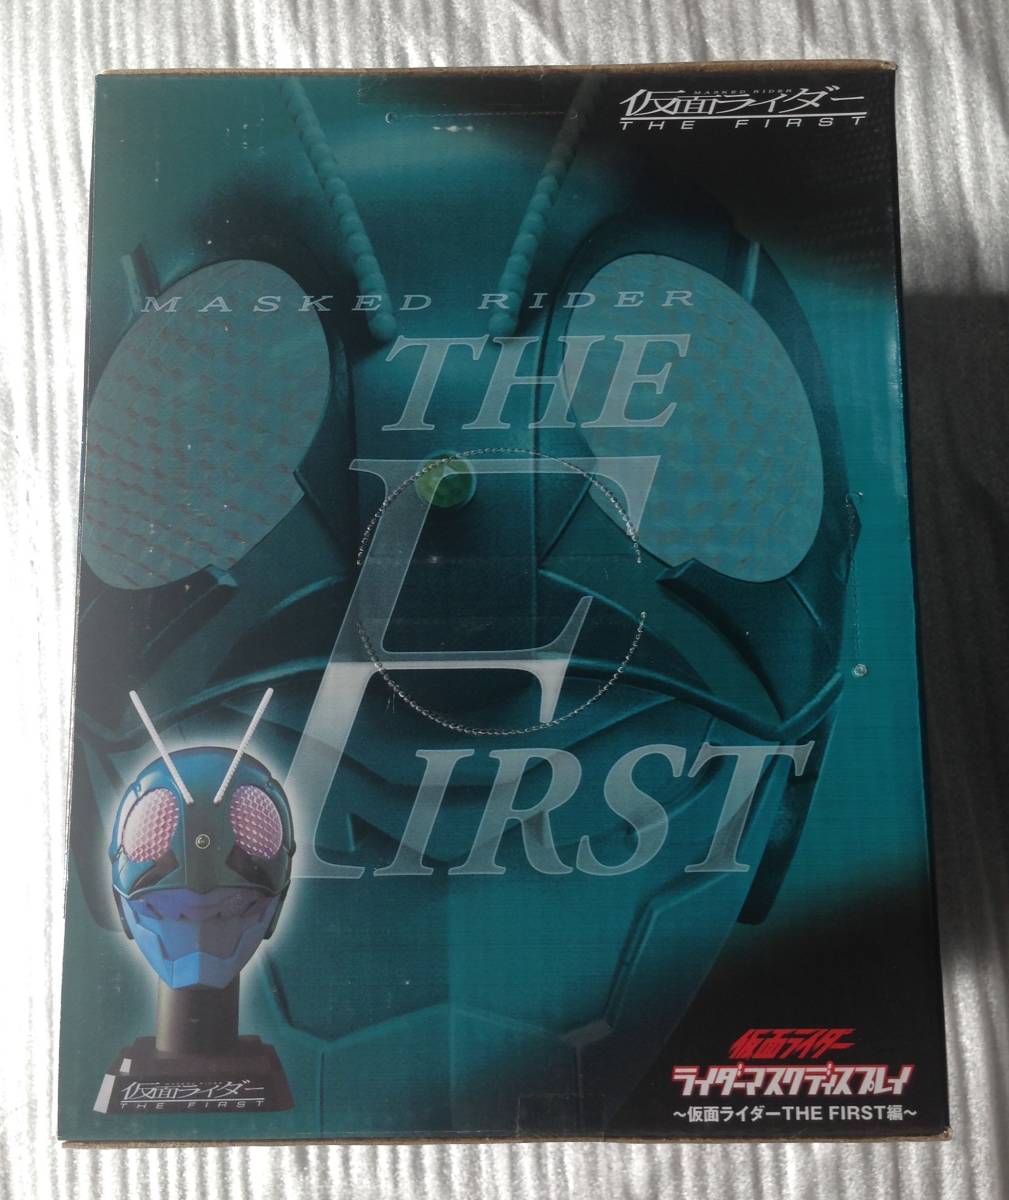  Kamen Rider 1 number rider mask display ~ Kamen Rider THE FIRST compilation ~ * prompt decision *